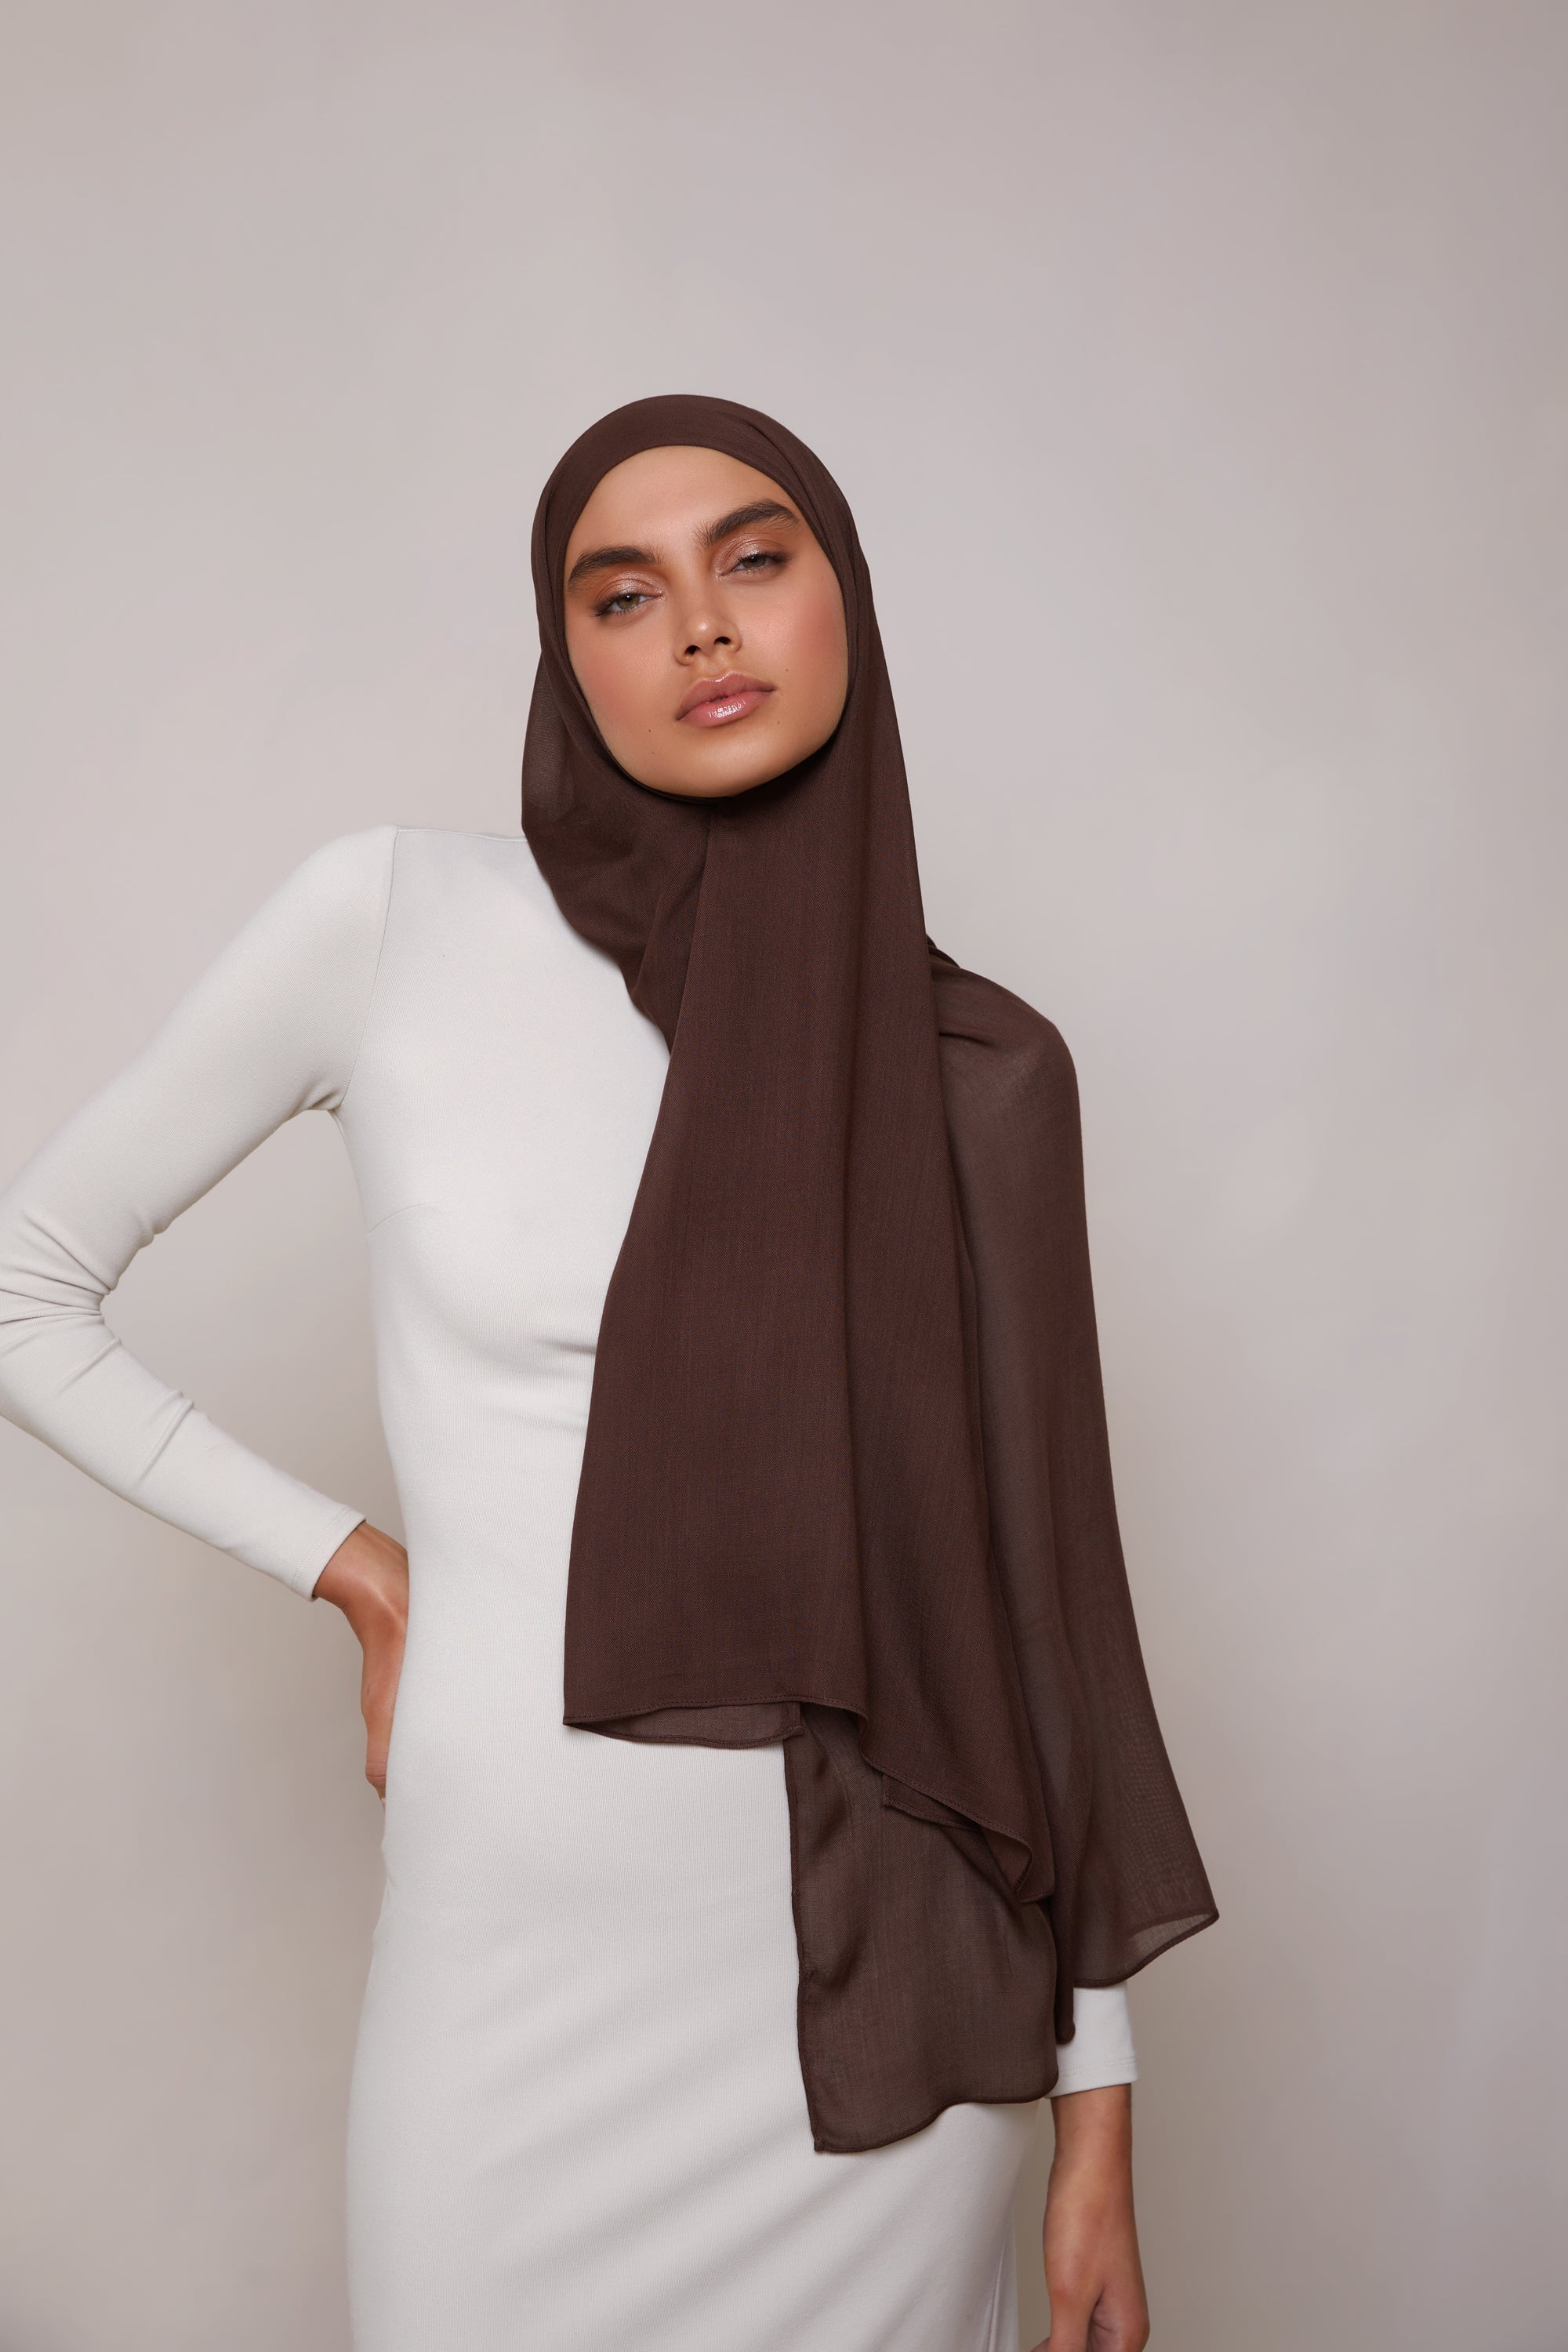 Modal Hijab - Brownie Veiled 